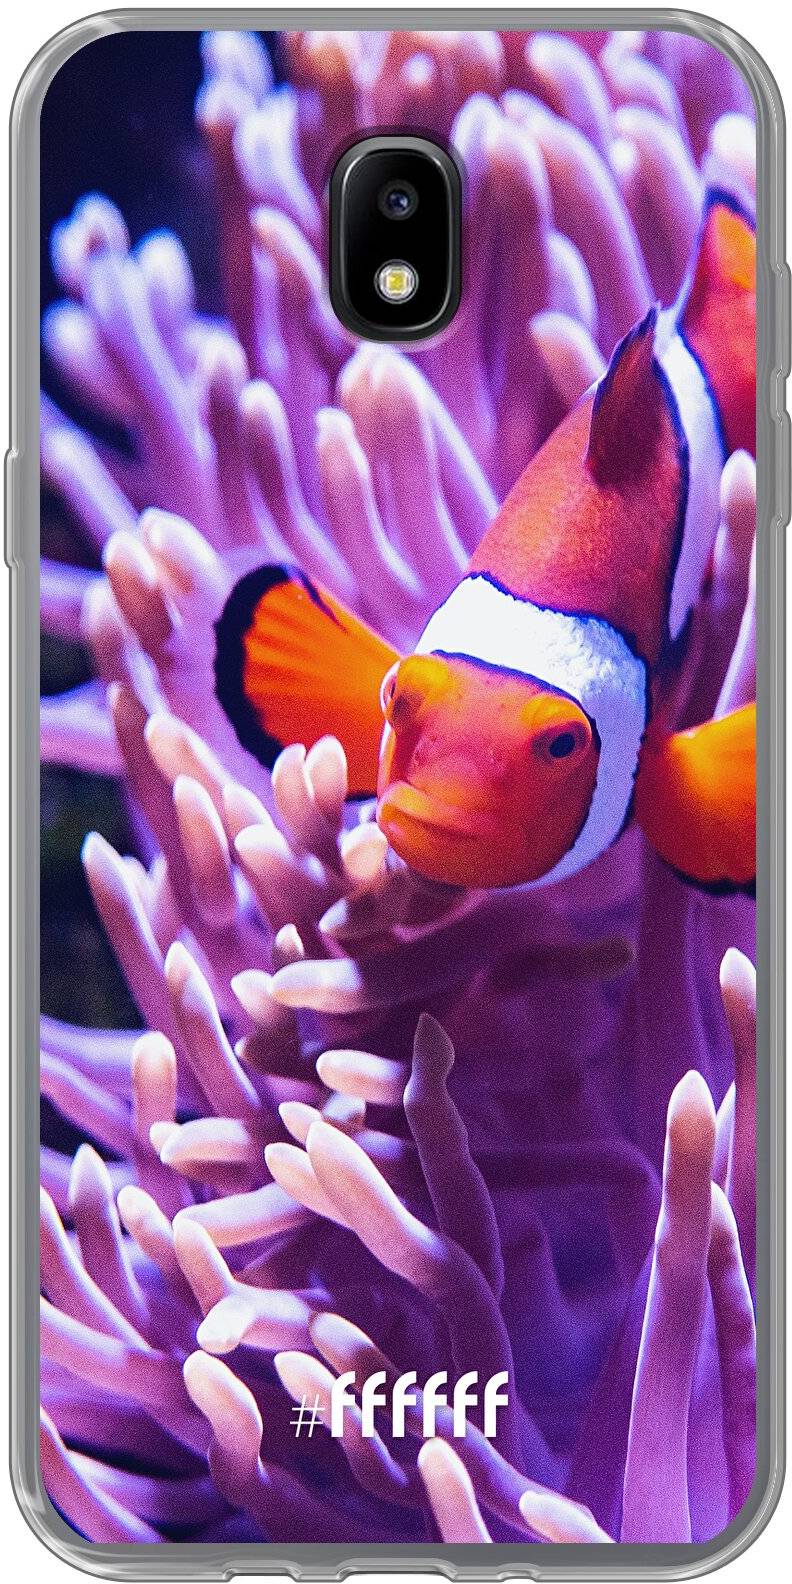 Nemo Galaxy J5 (2017)